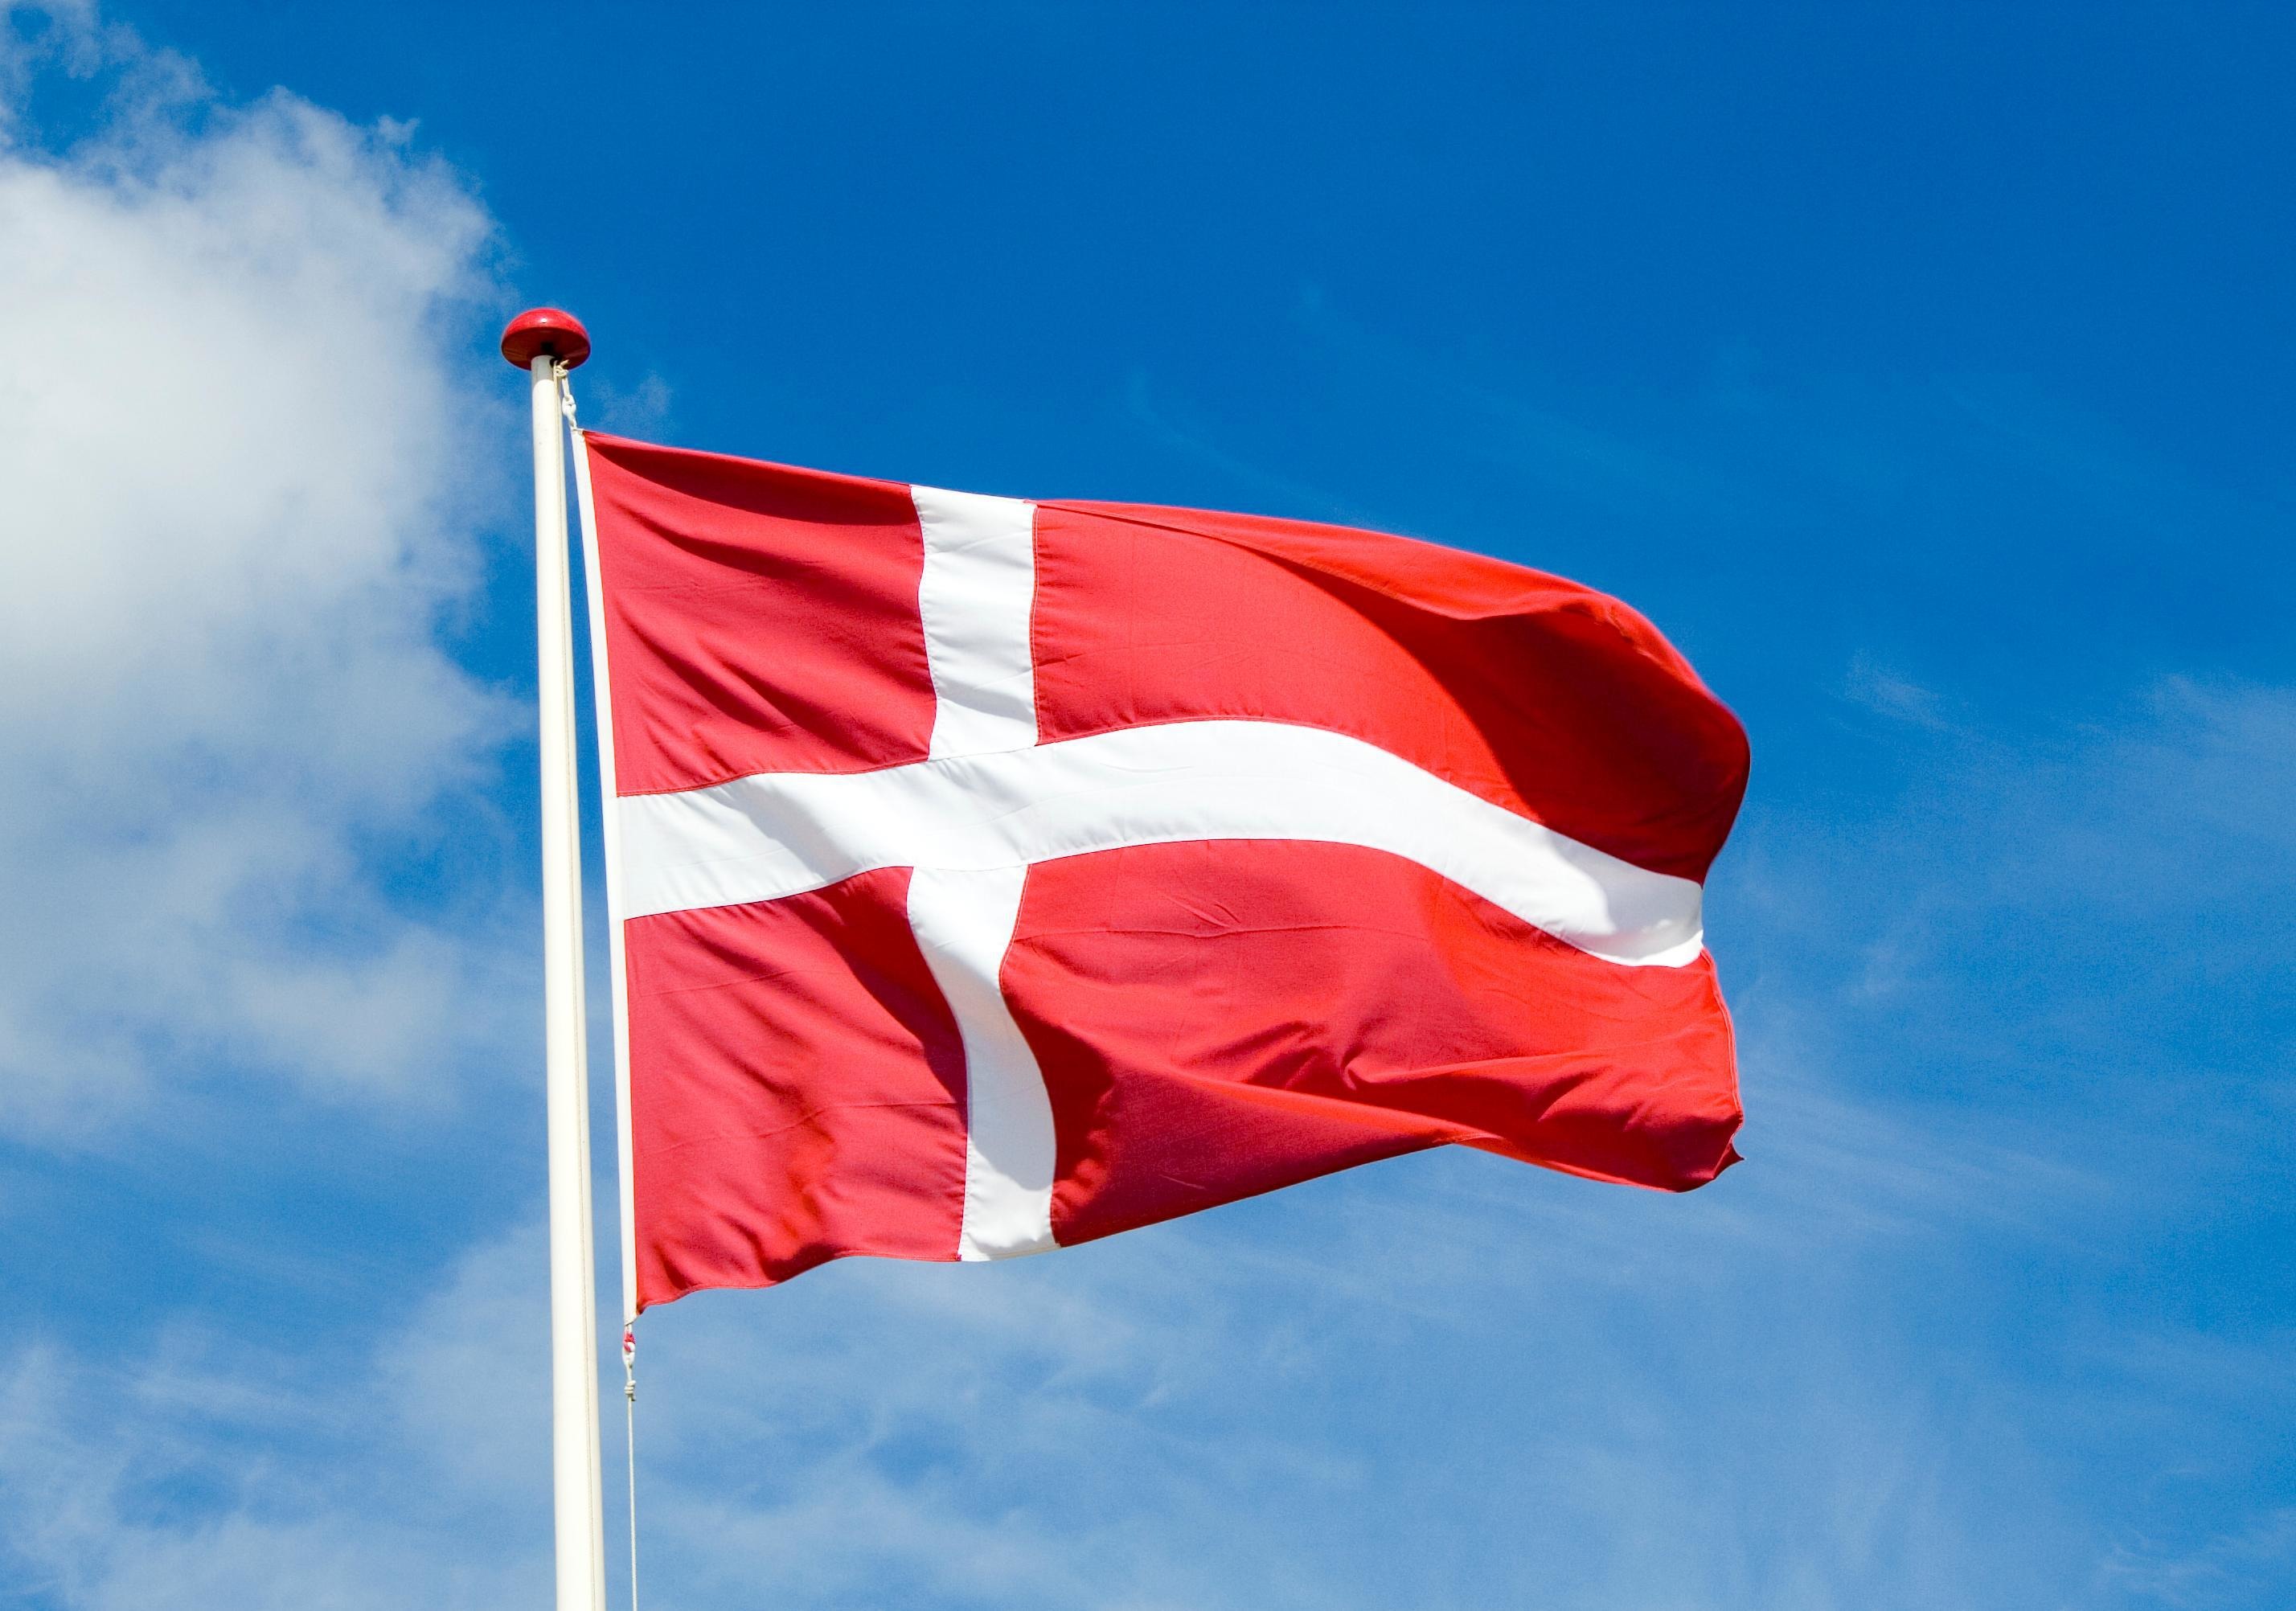 Danmark. Флаг Дании. Данмарк флаг. Государственный флаг Дании. Дания флаг Денмарк.